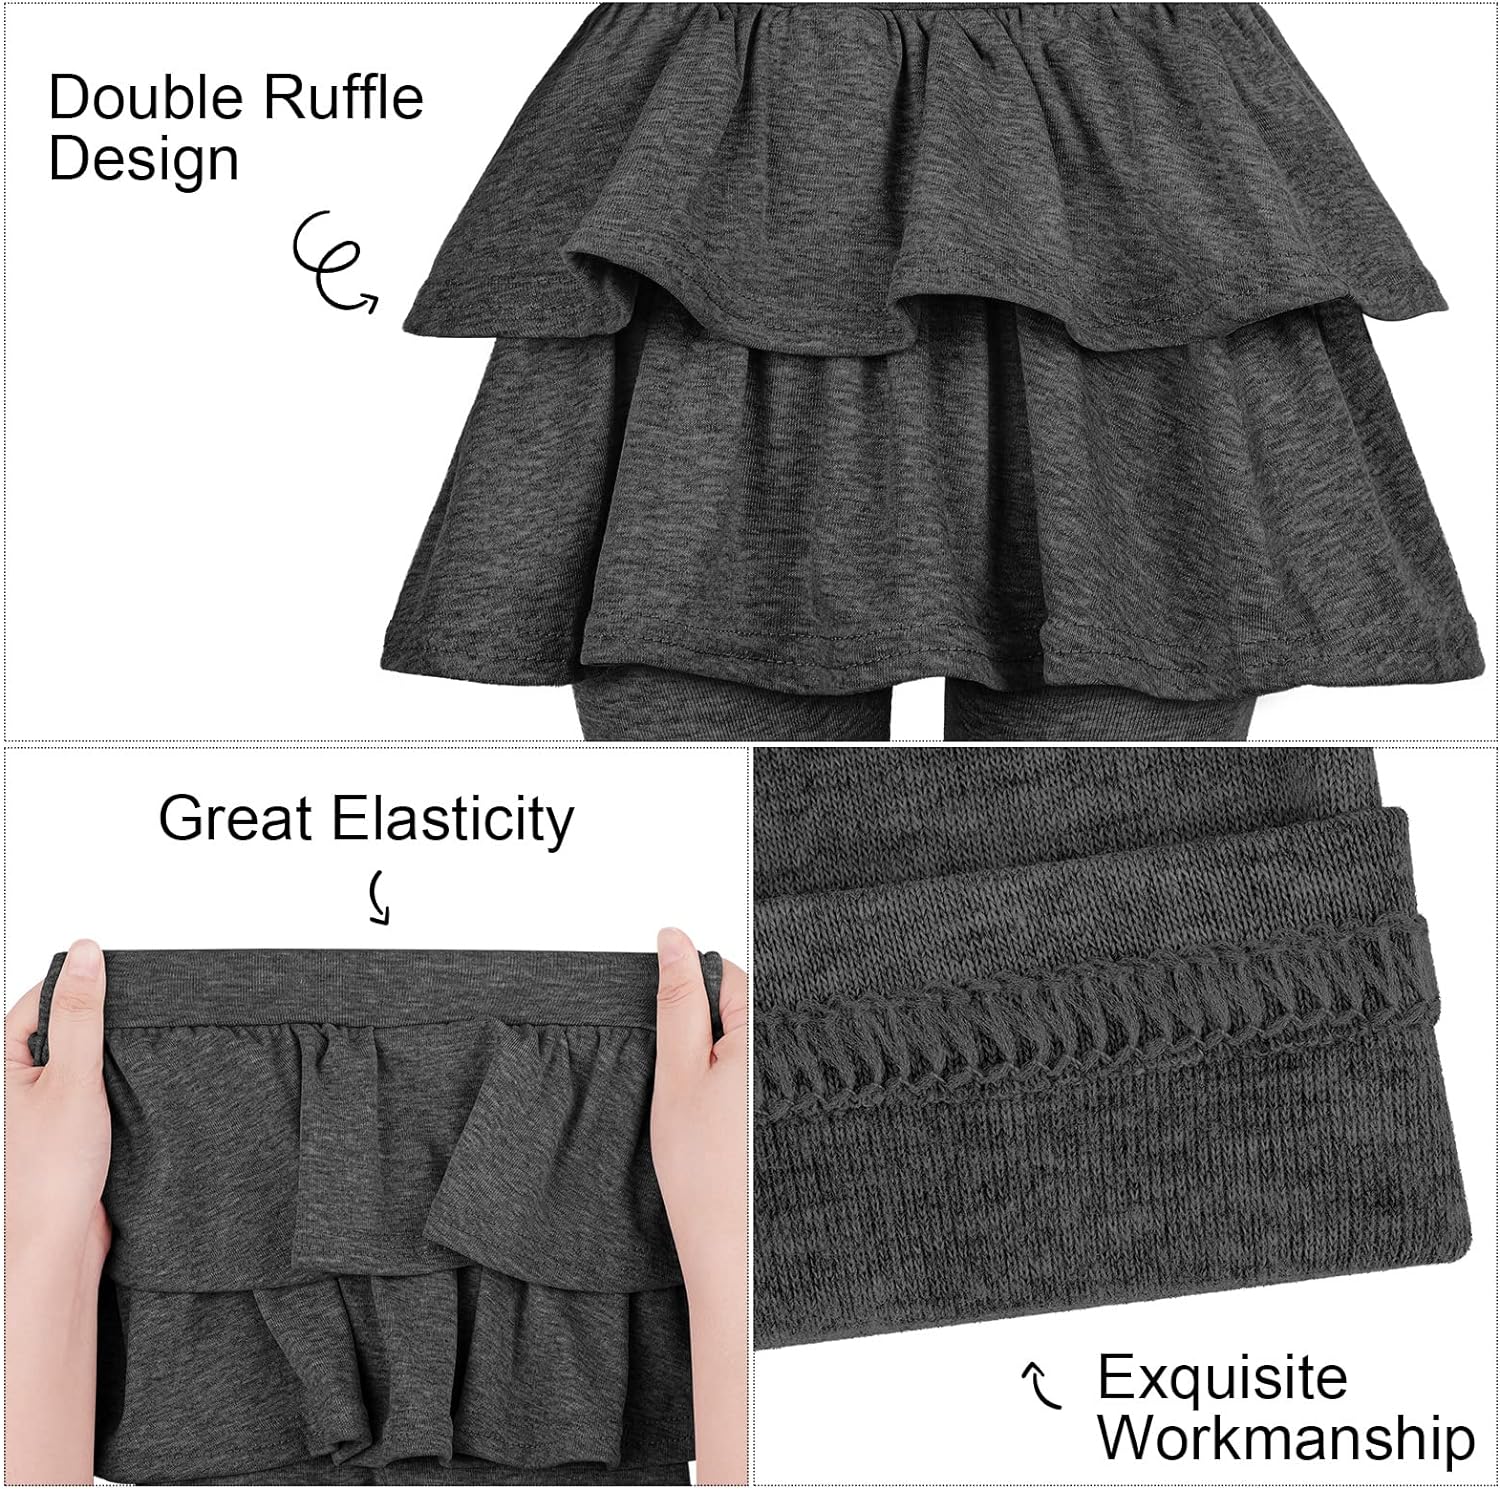  Resinta 2 Pack Girls' Leggings with Skirt Cotton Tutu